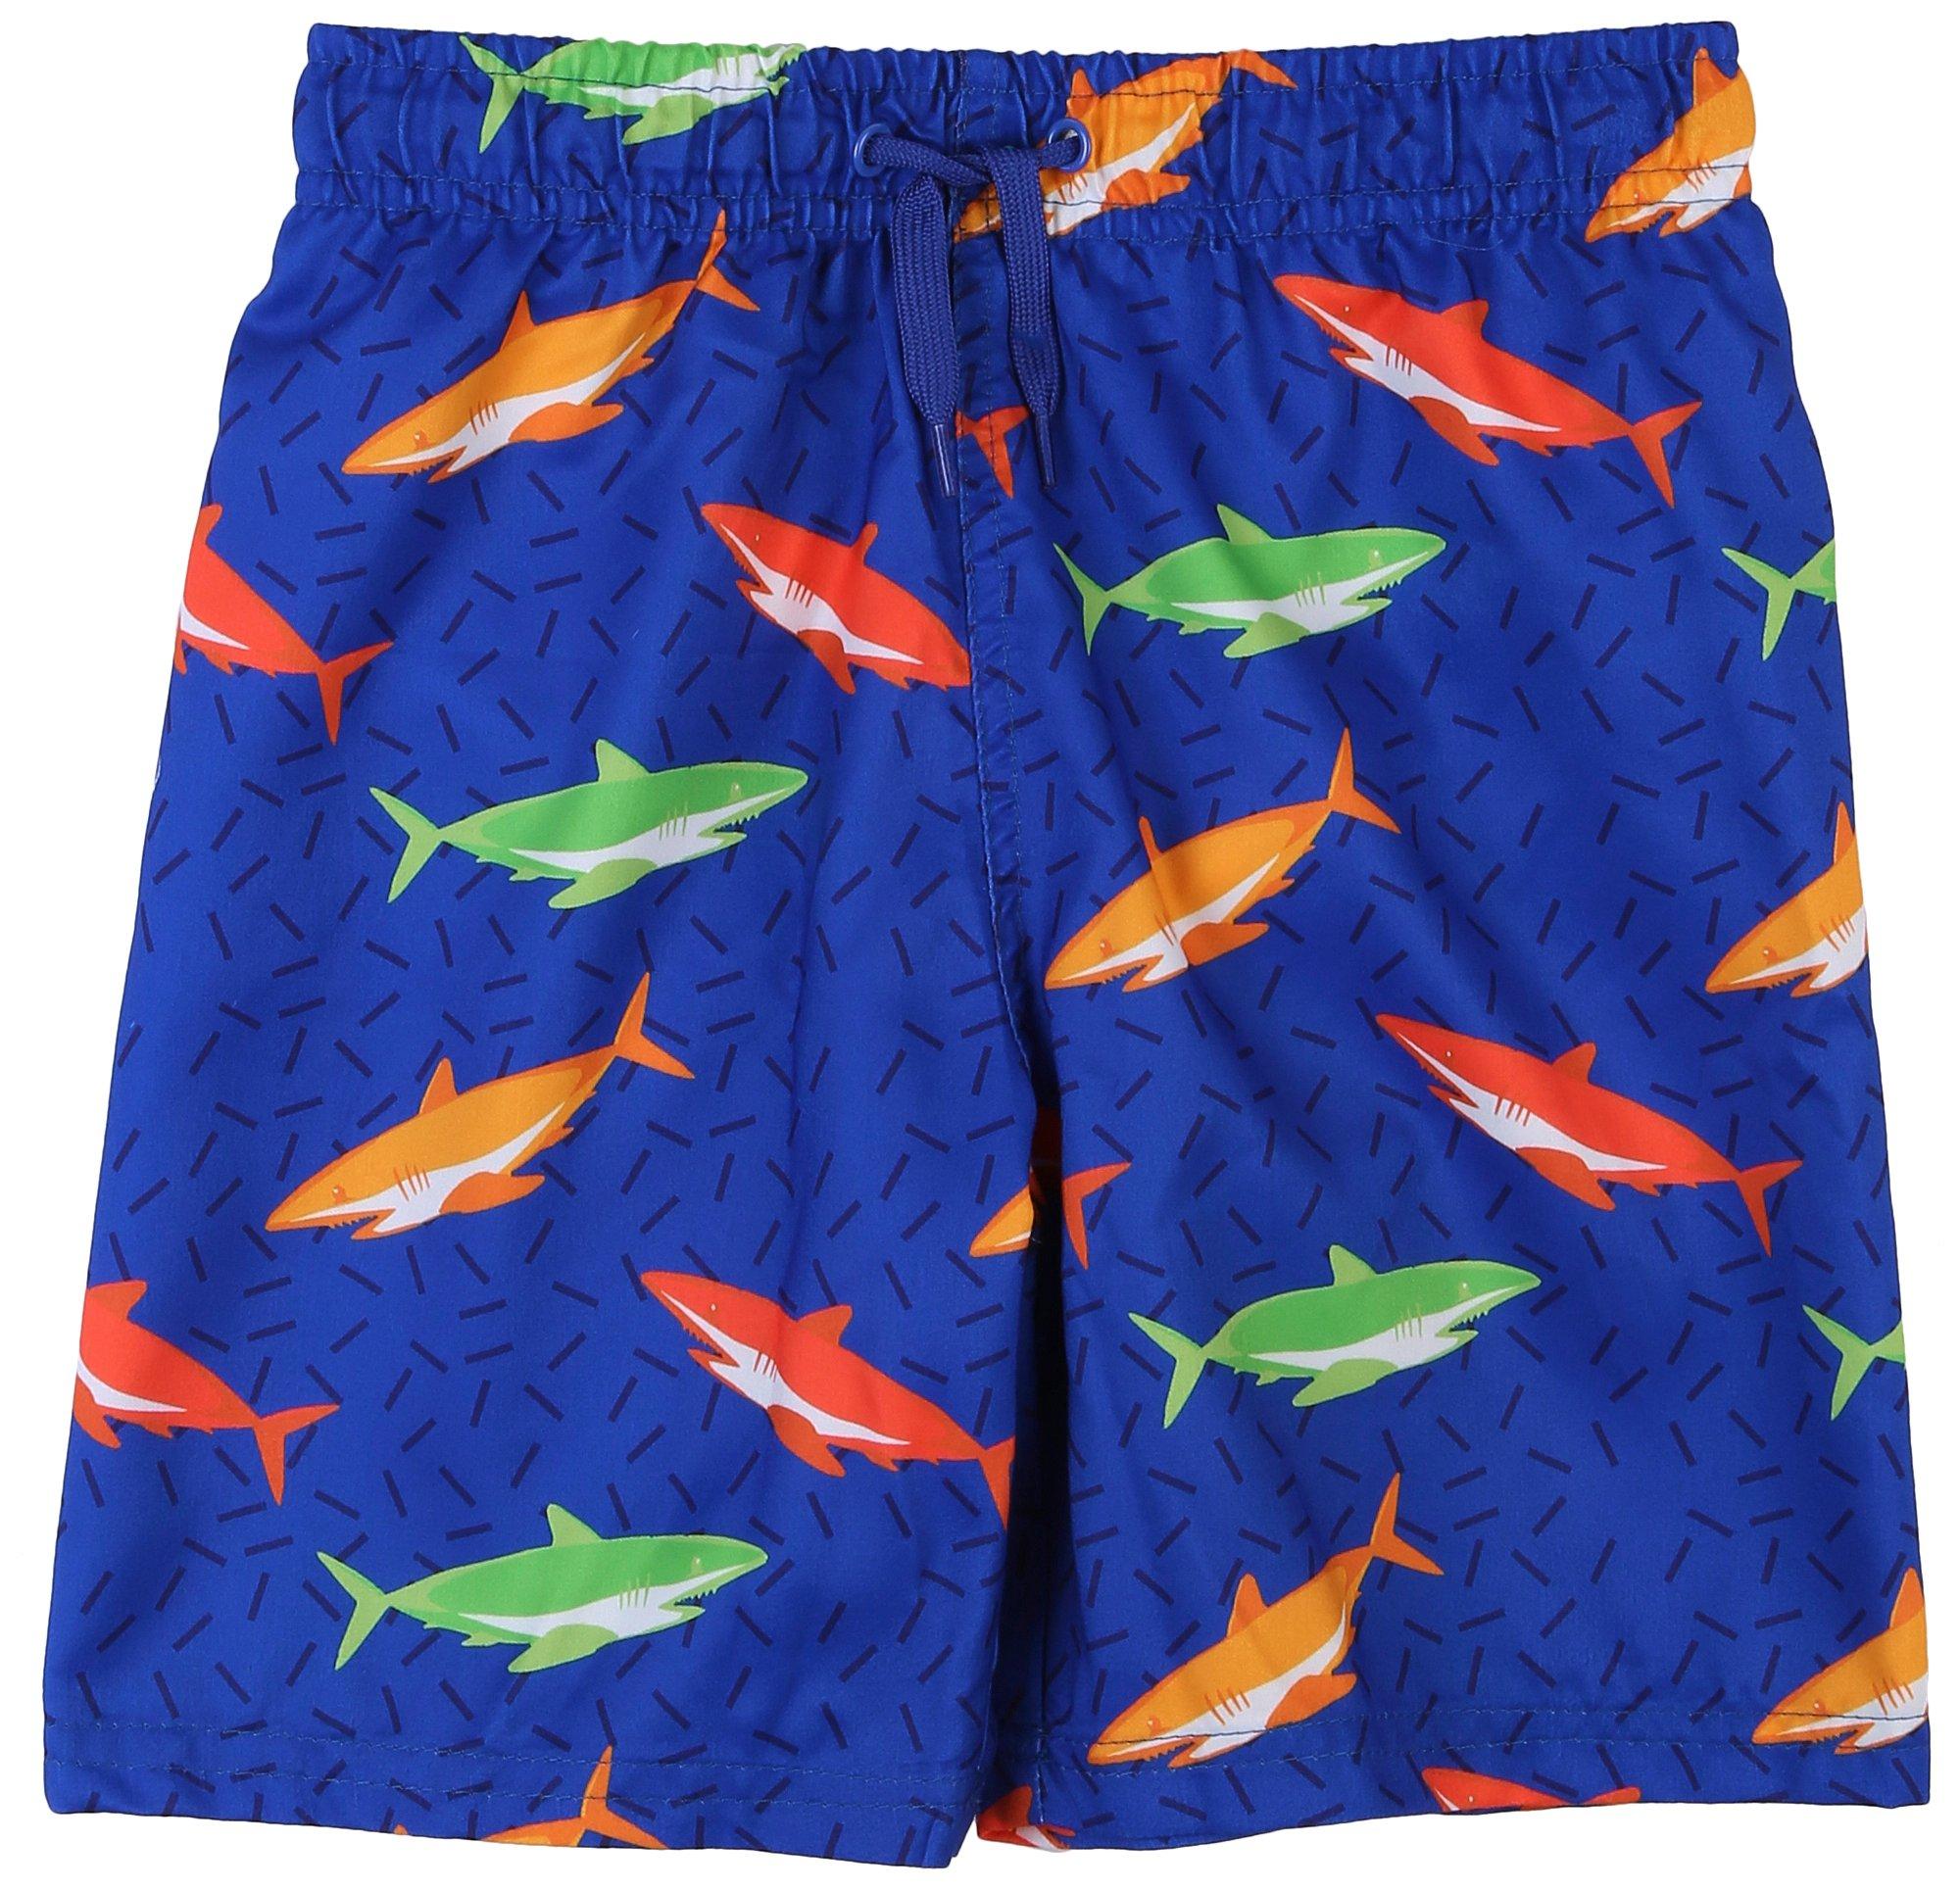 Little & Big Boys Shark Print Swimsuit Shorts